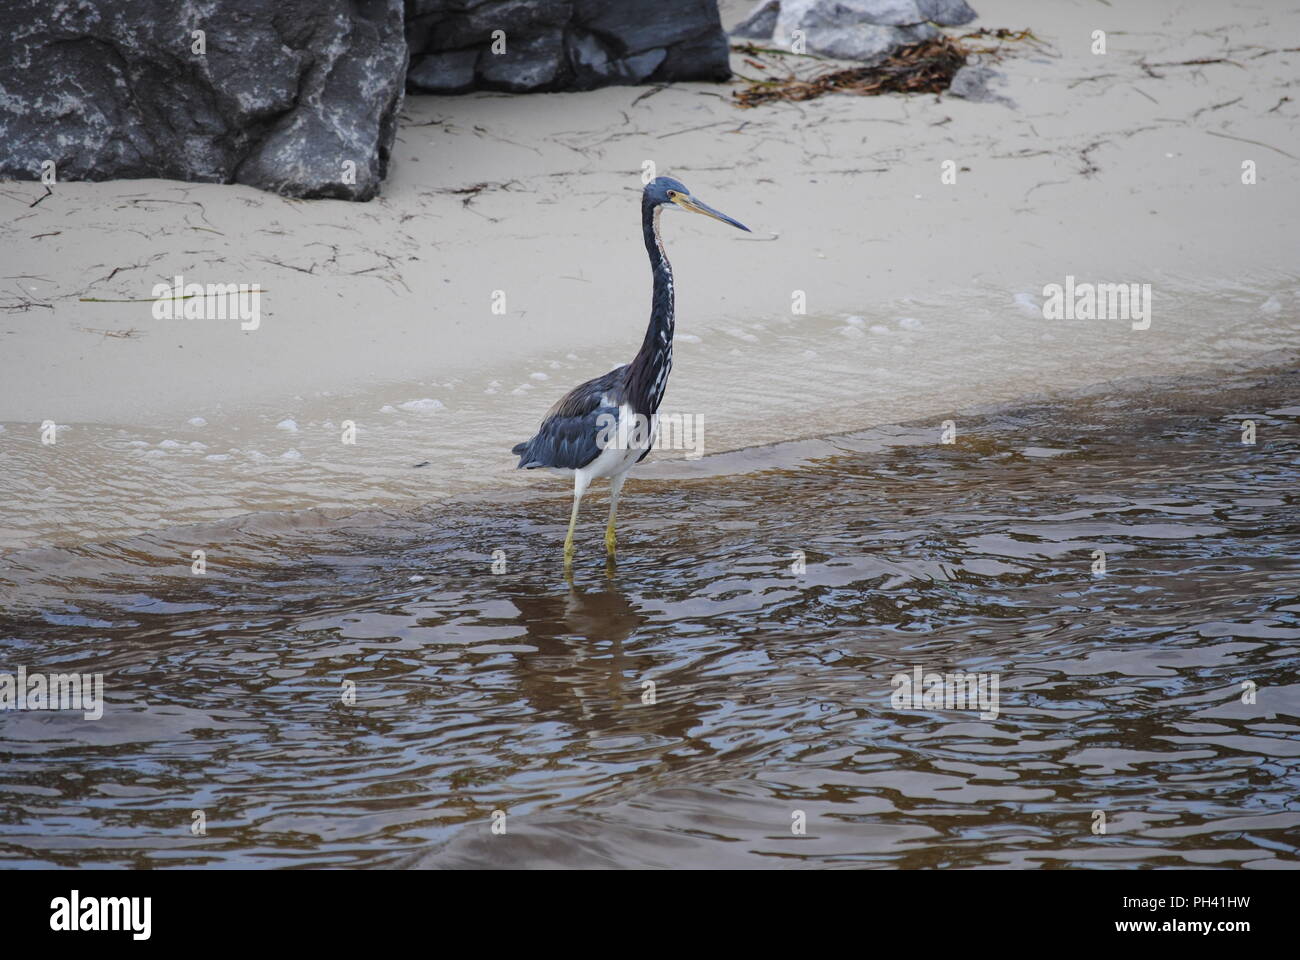 Gulf coast wildlife Stock Photo